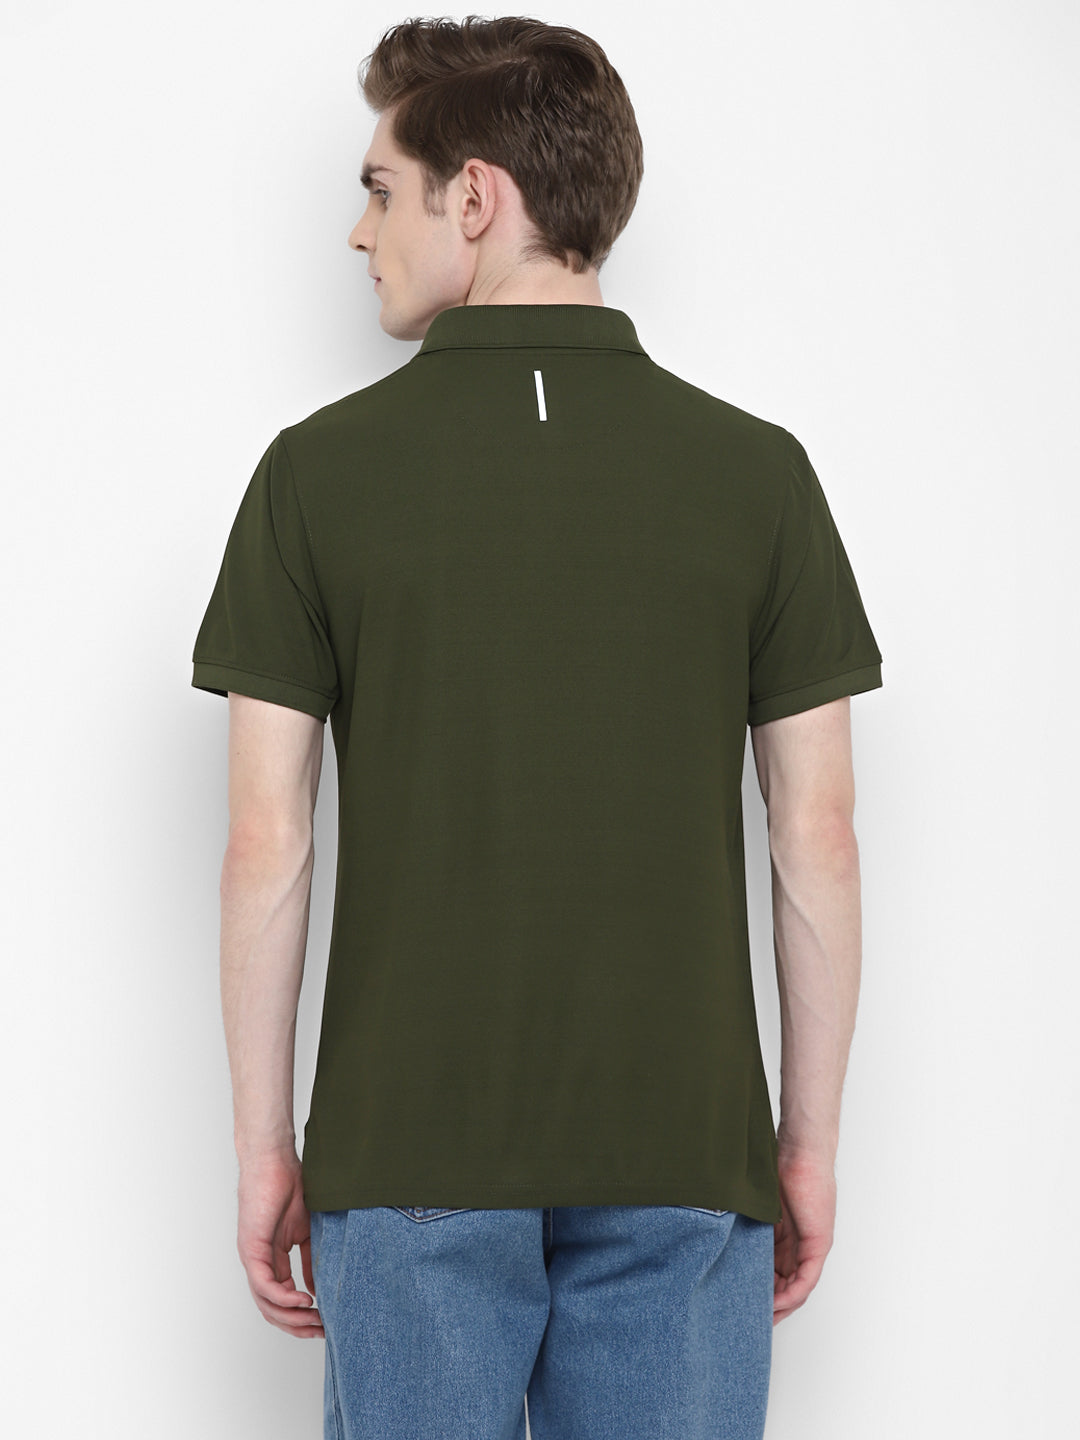 Kooltex Polo T-Shirt For Men - Dark Olive